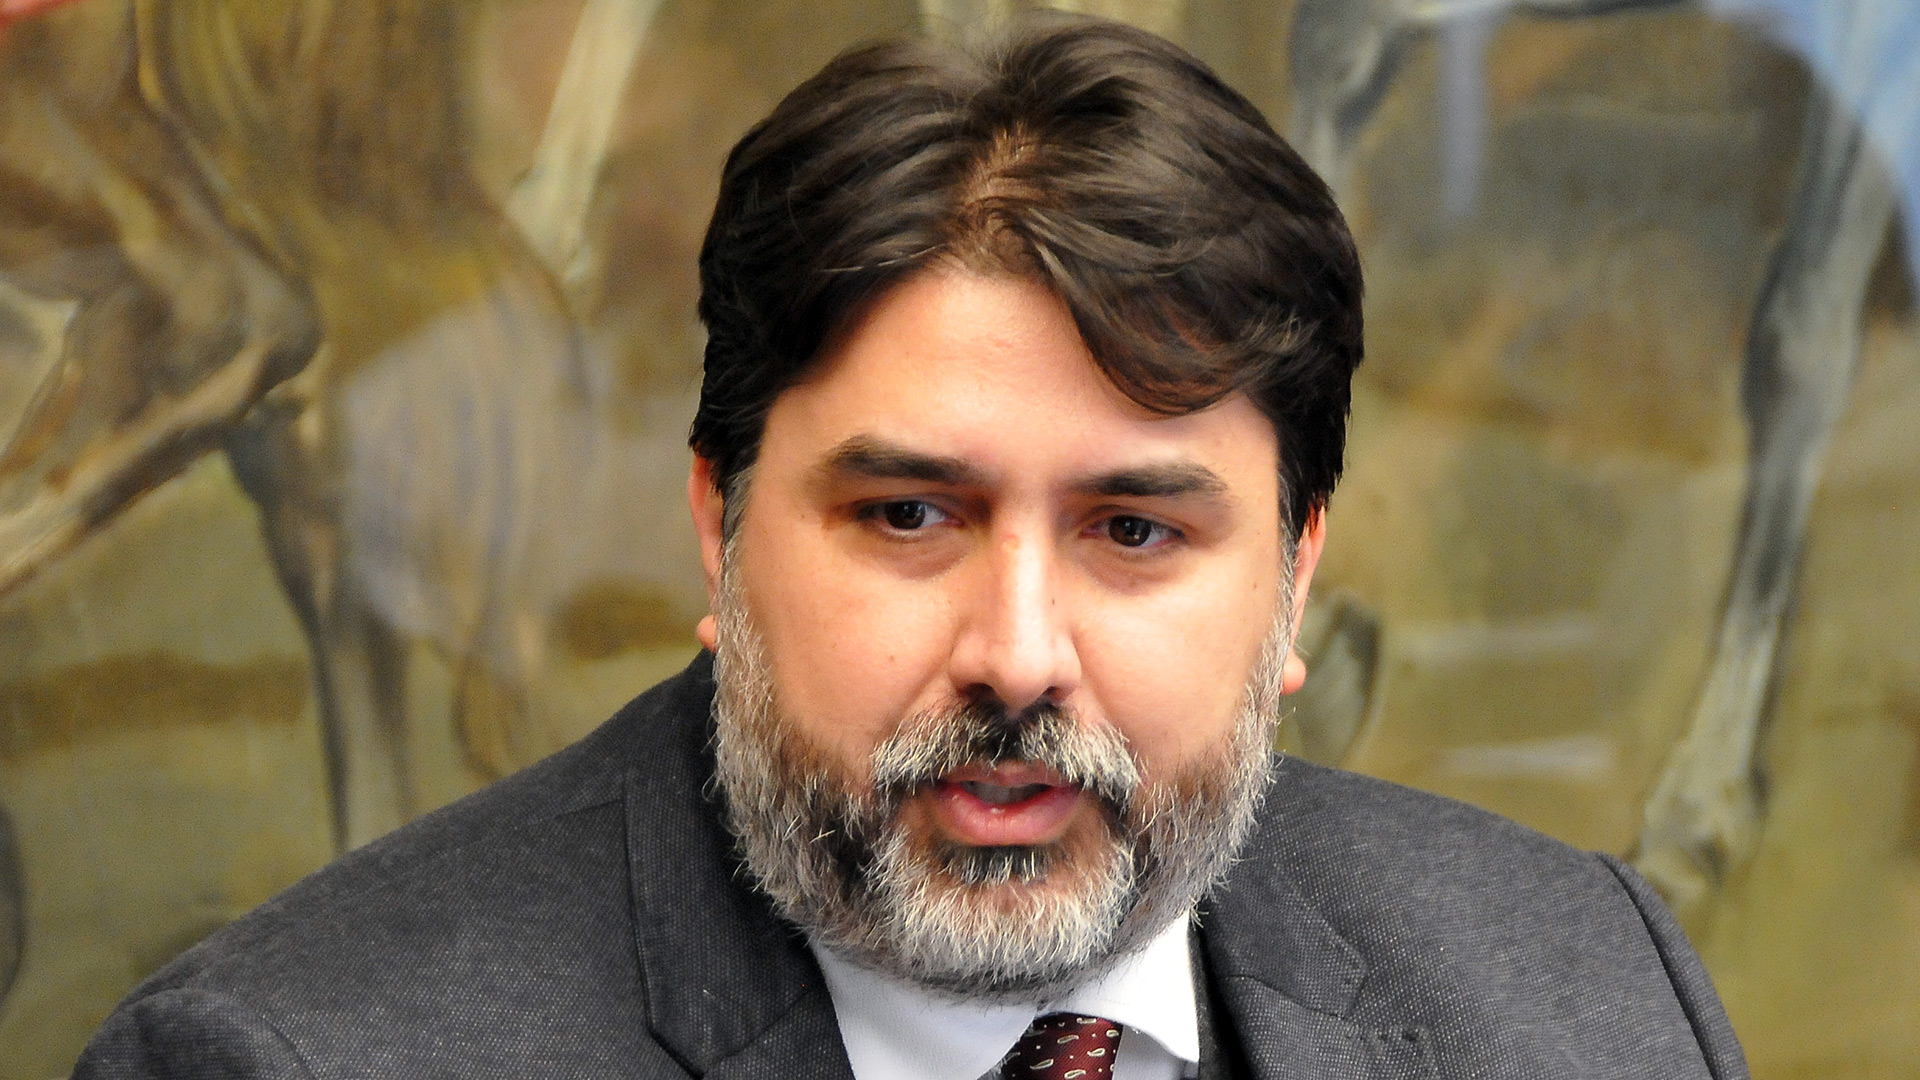 Presidente Christian Solinas